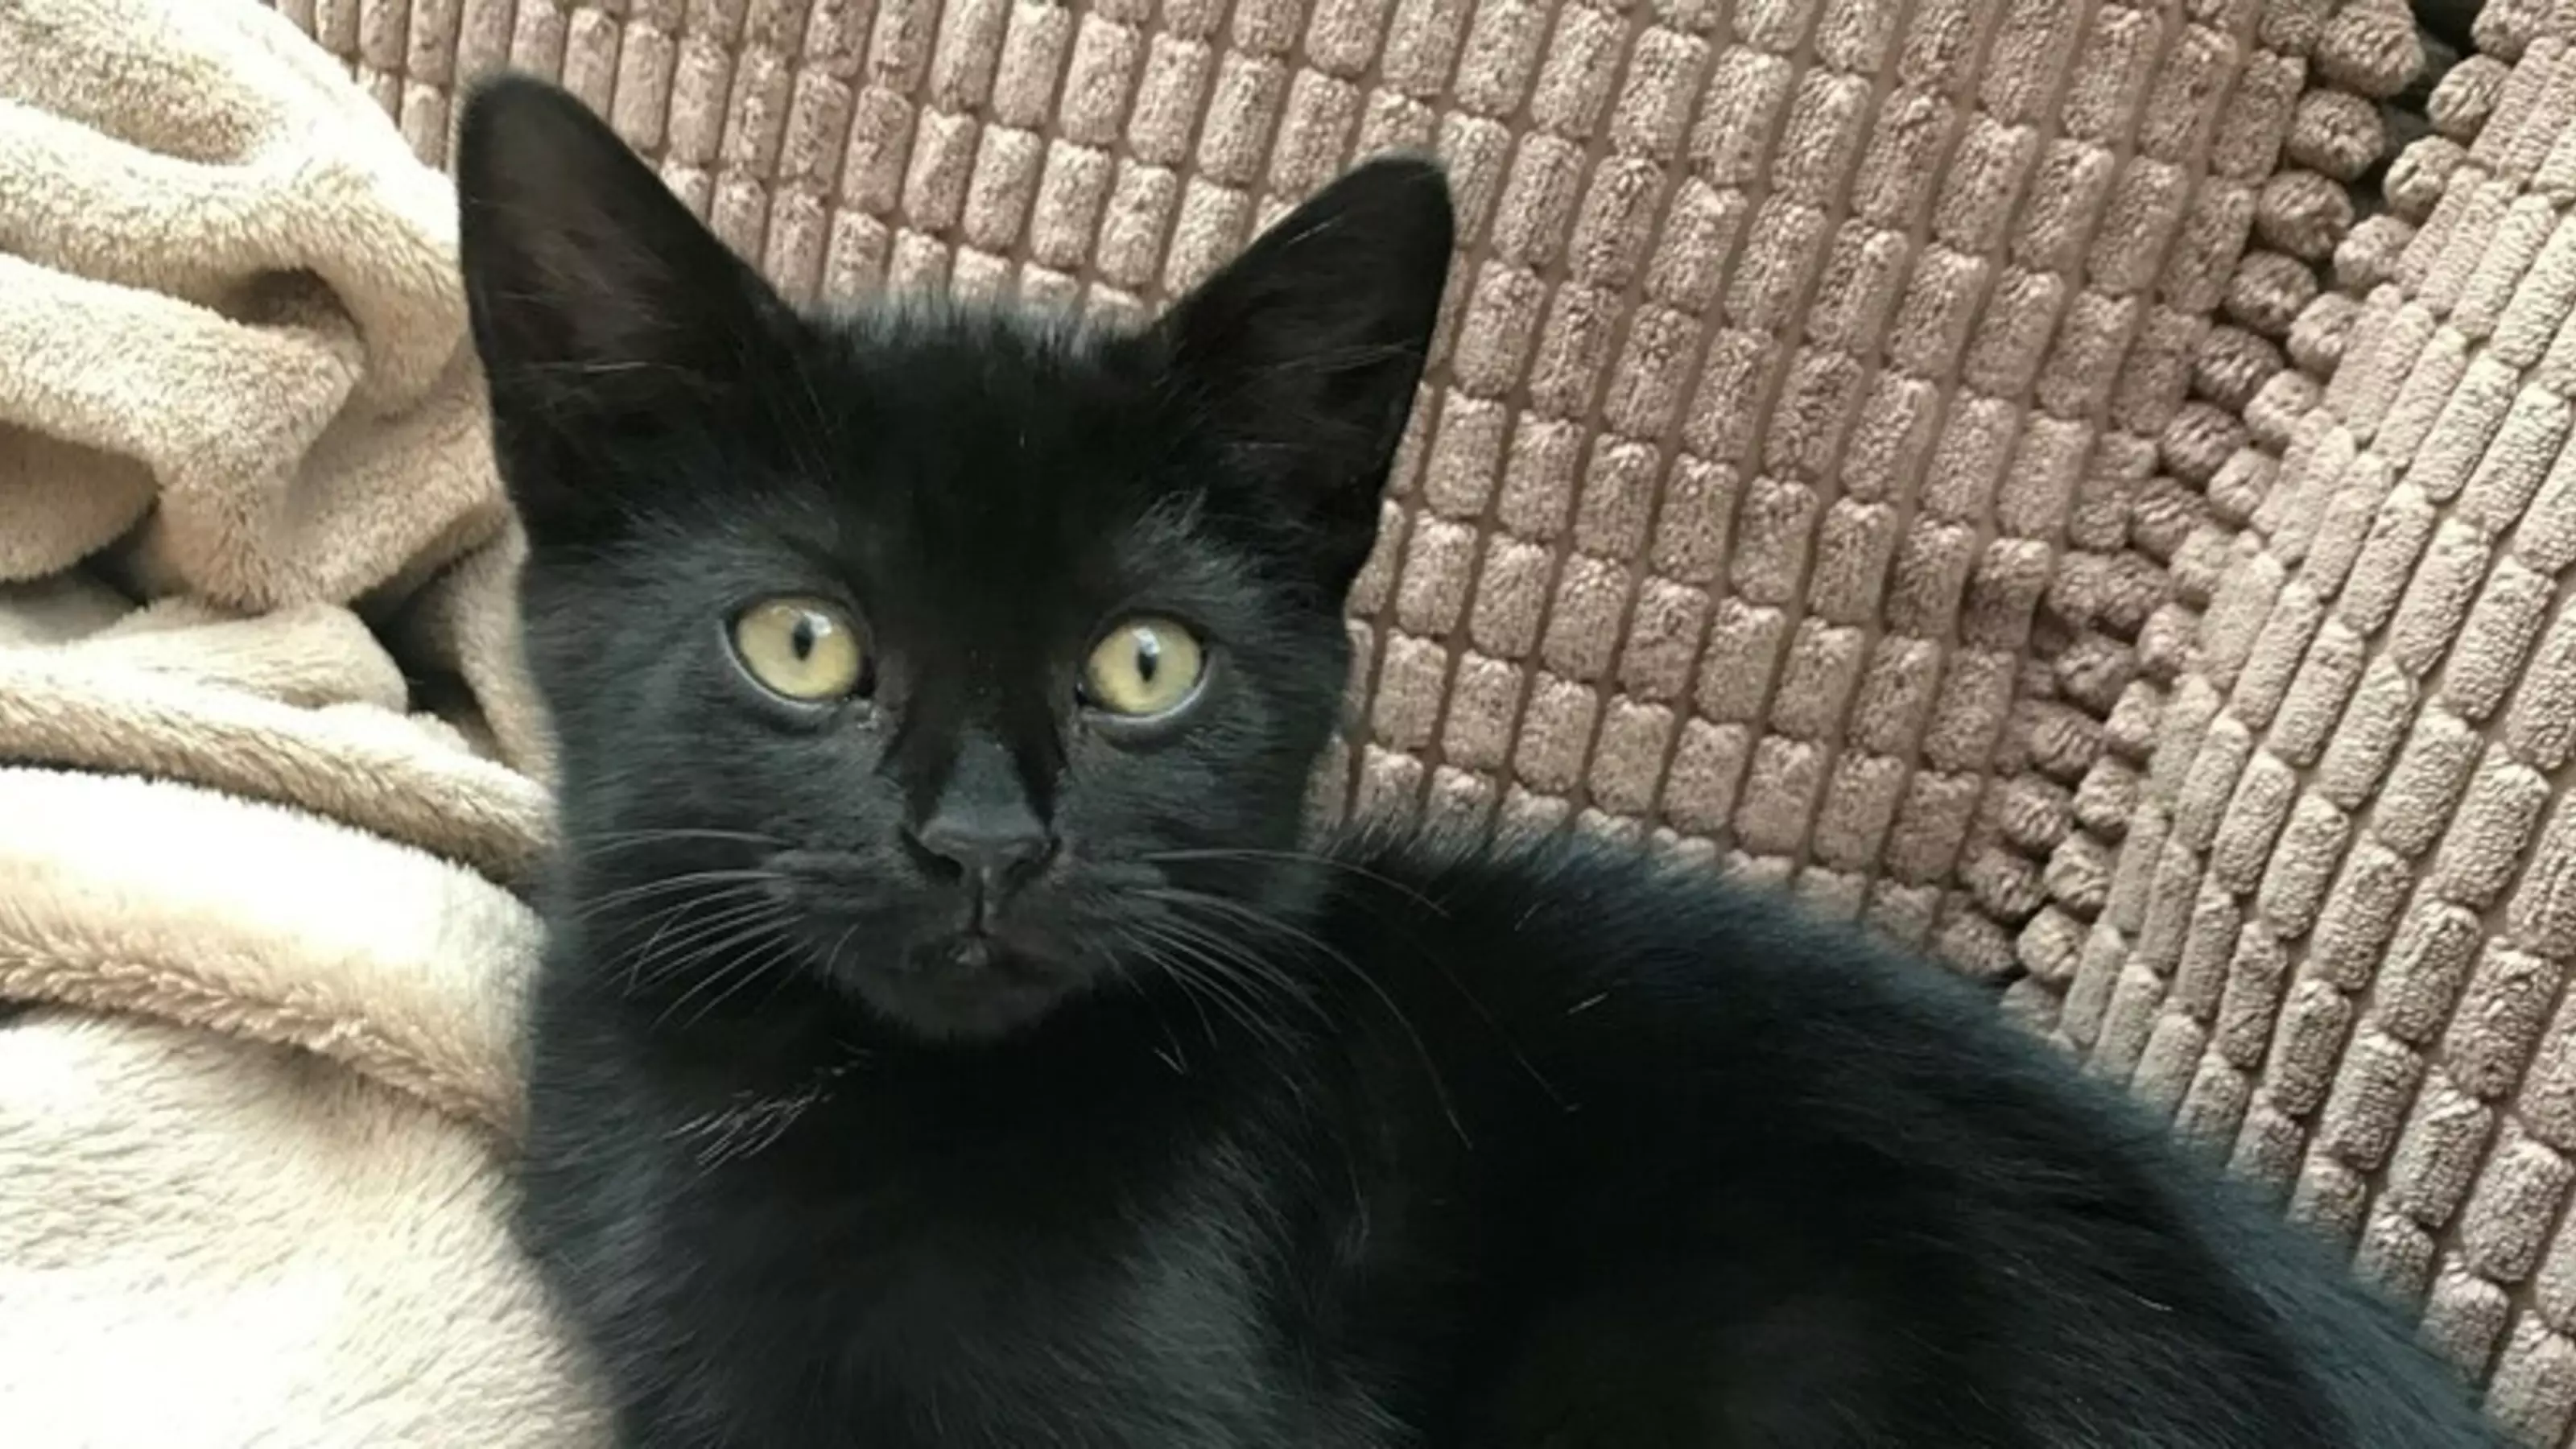 Bonnet, the black cat, lying on the sofa